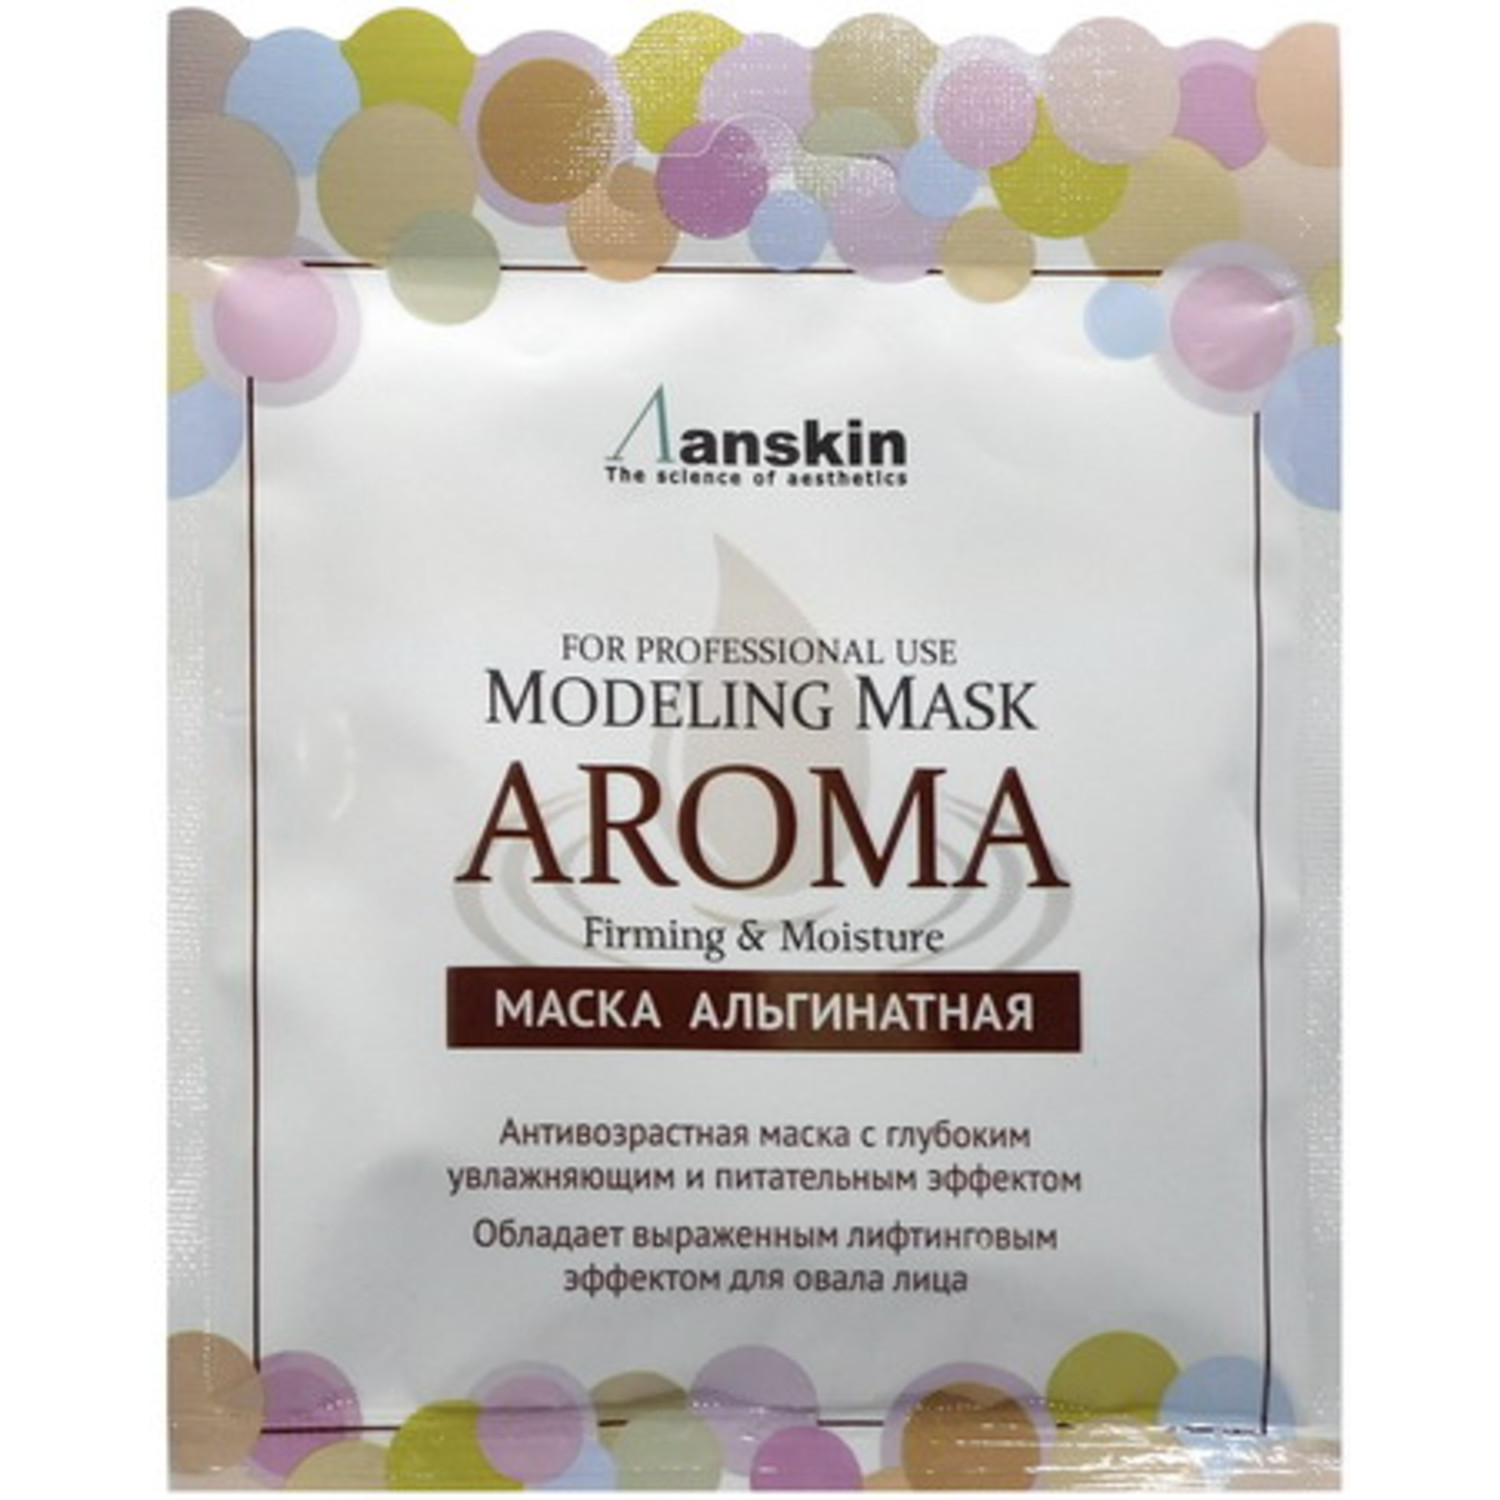 Anskin Modeling Mask Aroma Firming & Moisturizing альгинатная маска антивозрастная питательная, 25г. / 421782